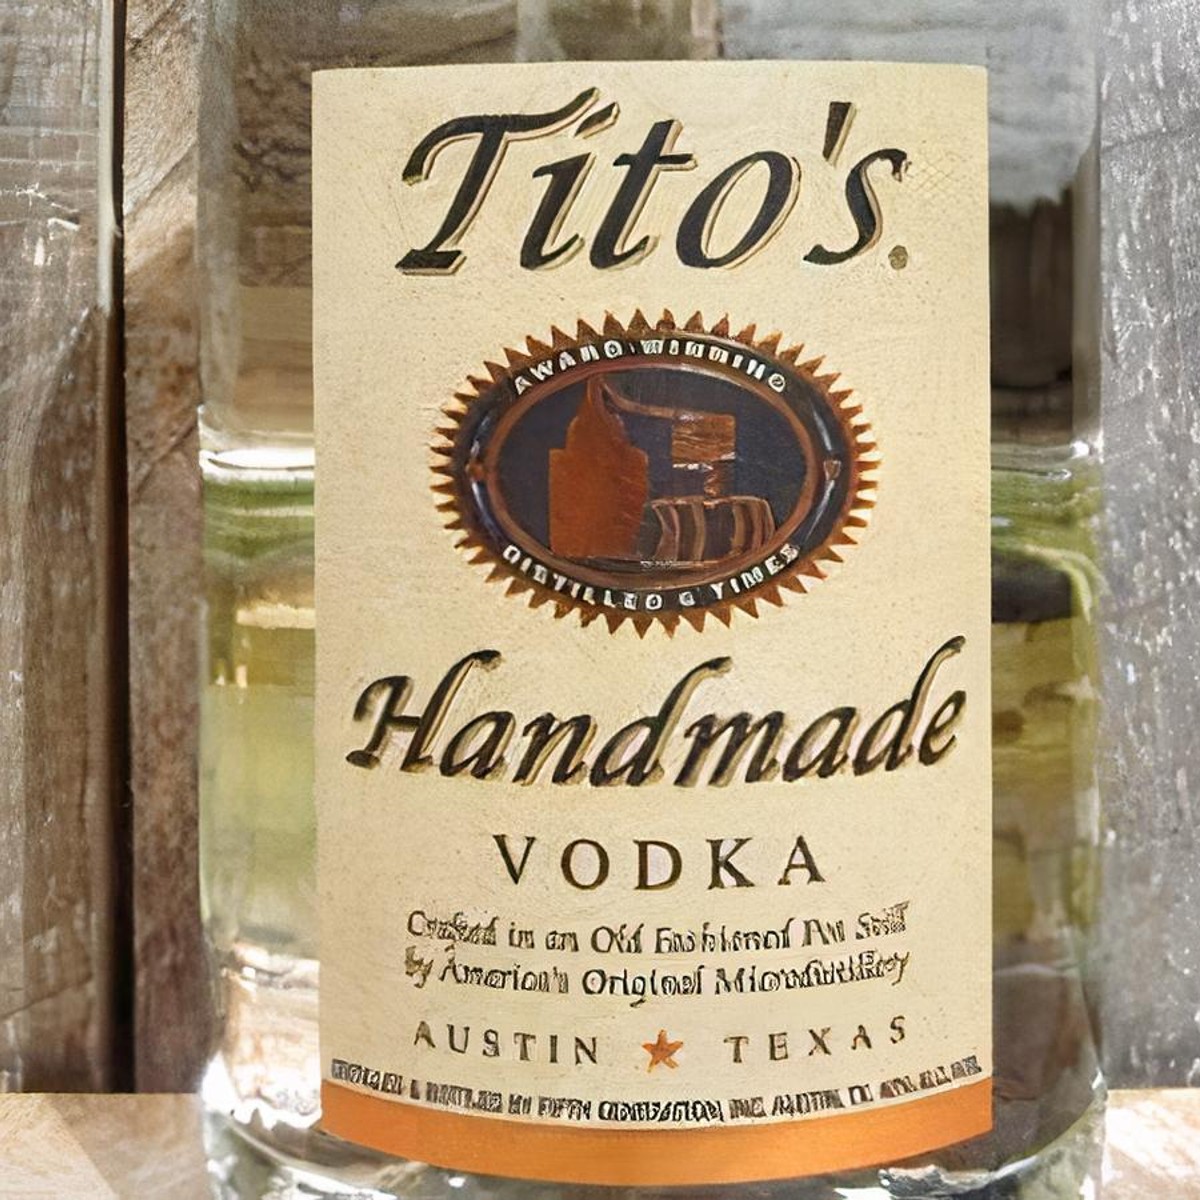 Tito's Crystal Clear Fanny Pack – Tito's Handmade Vodka